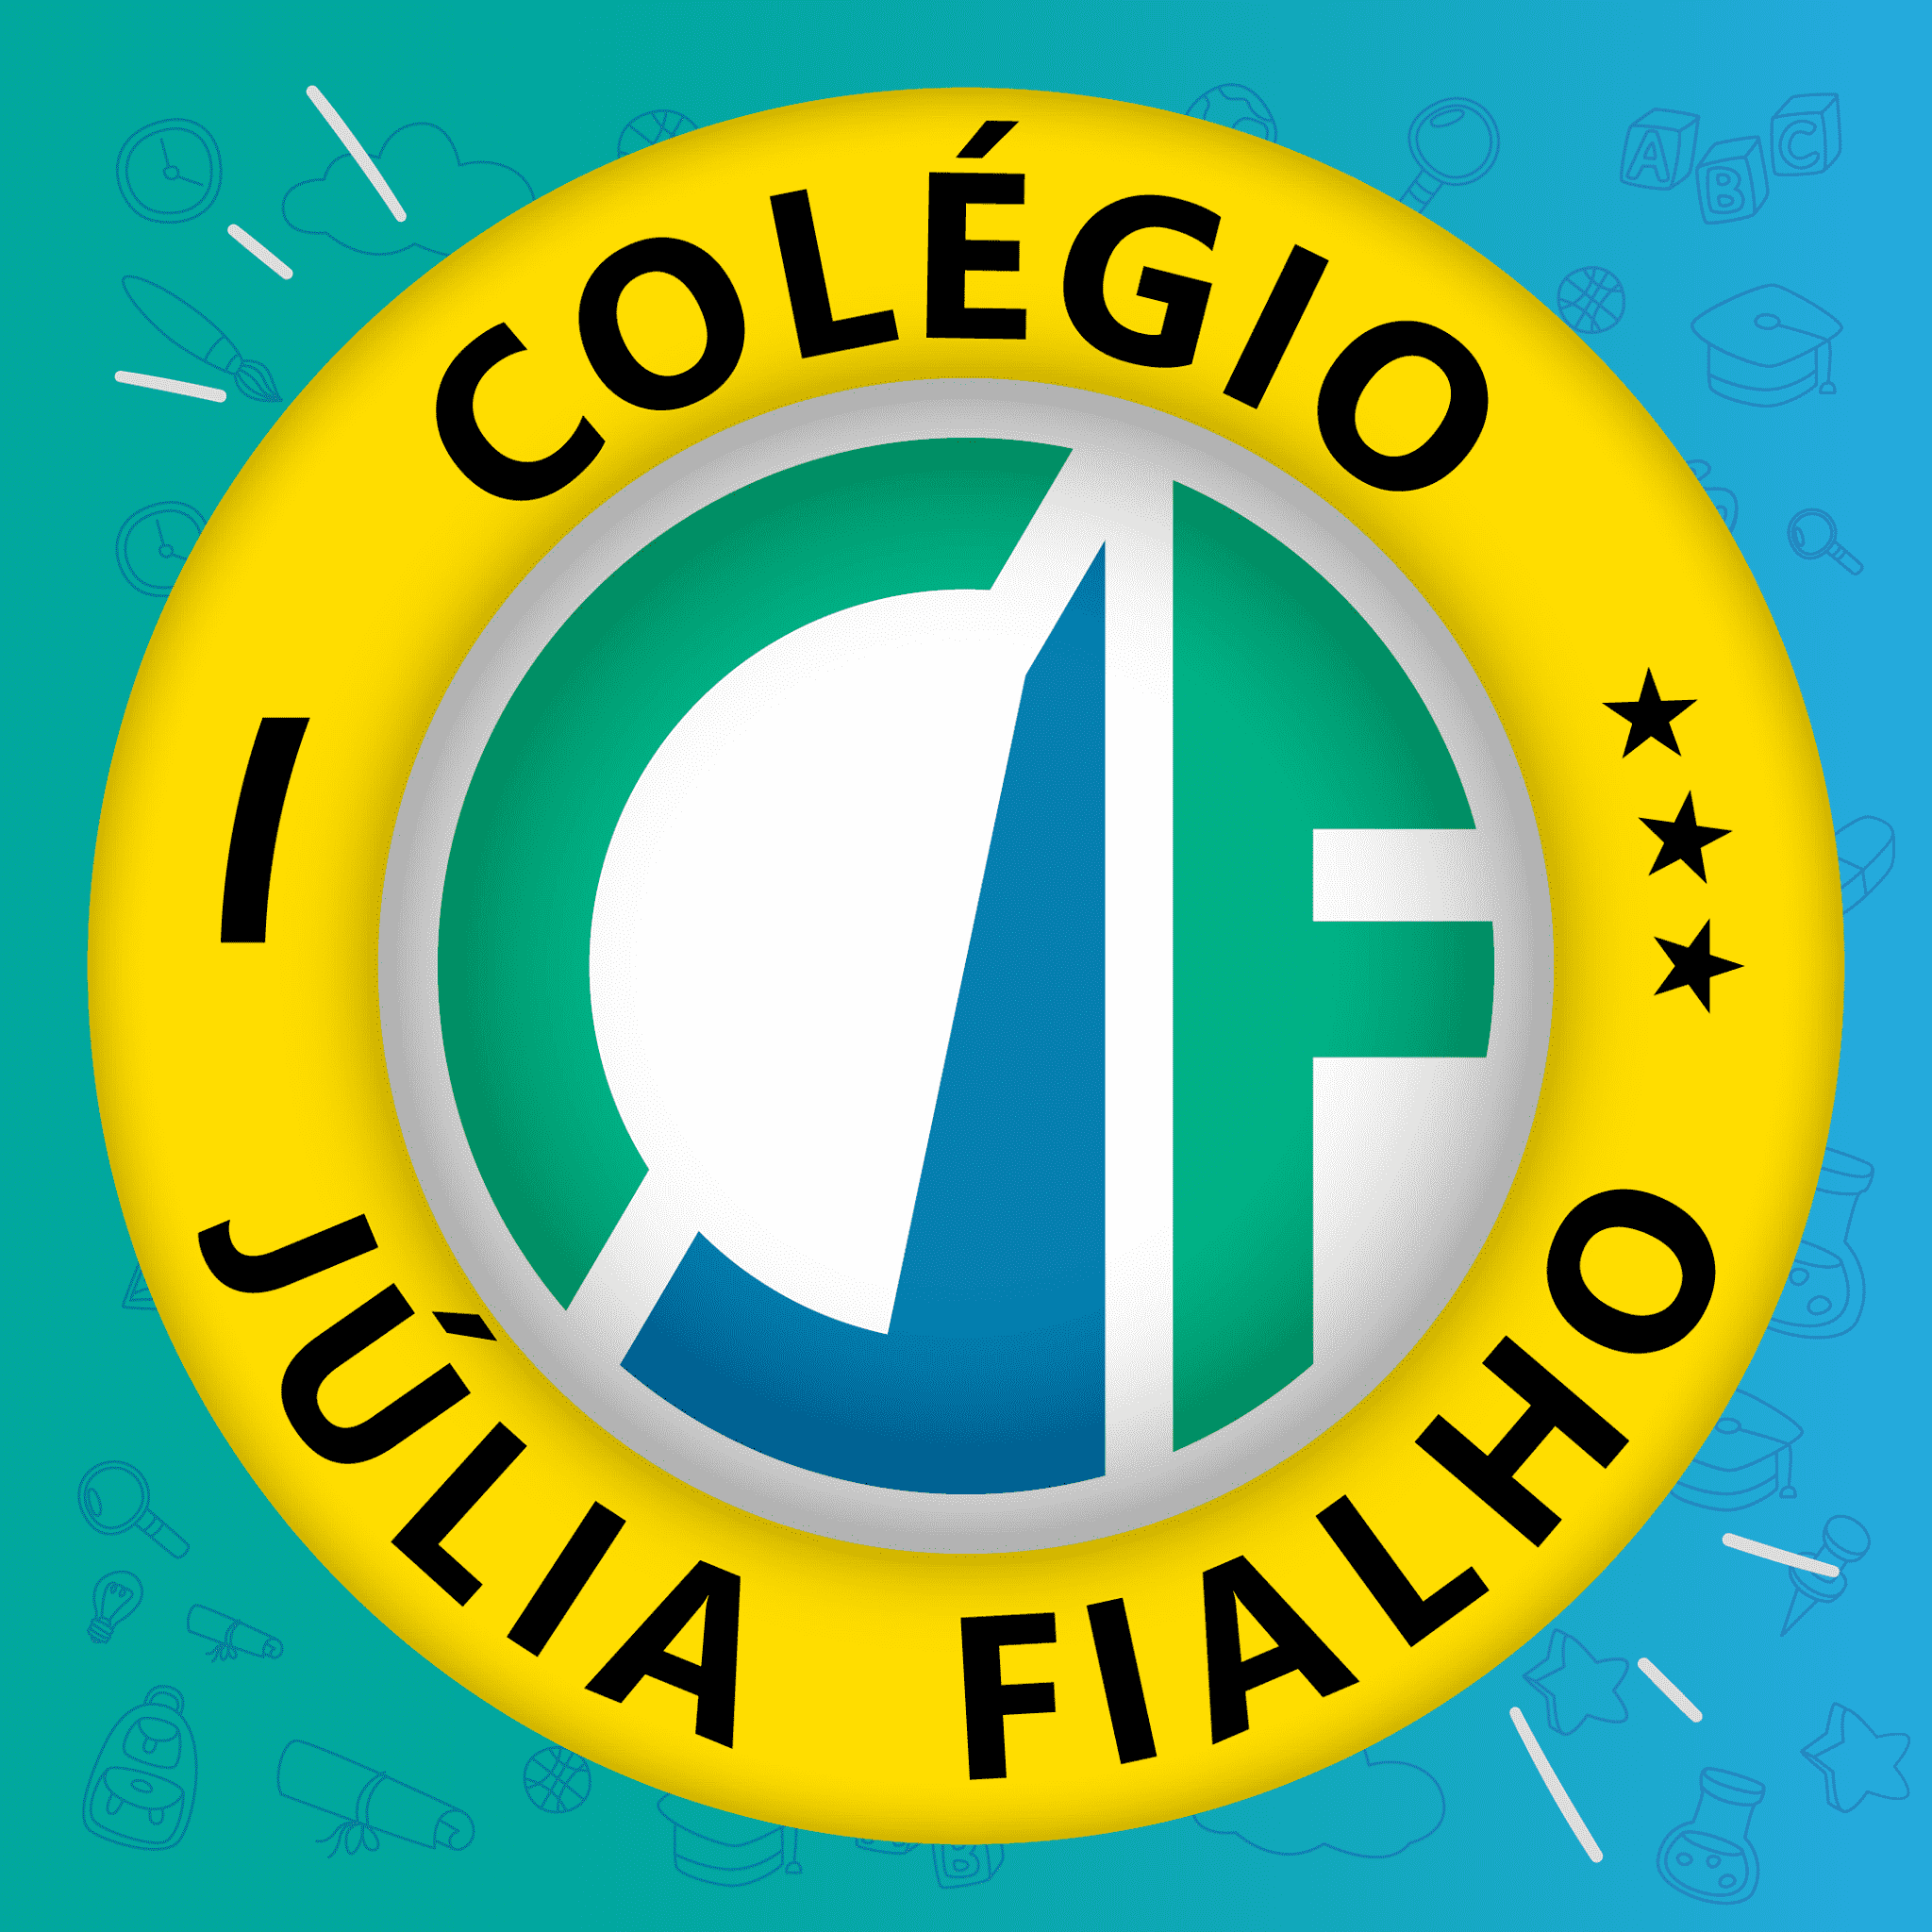  Colégio Julia Fialho 